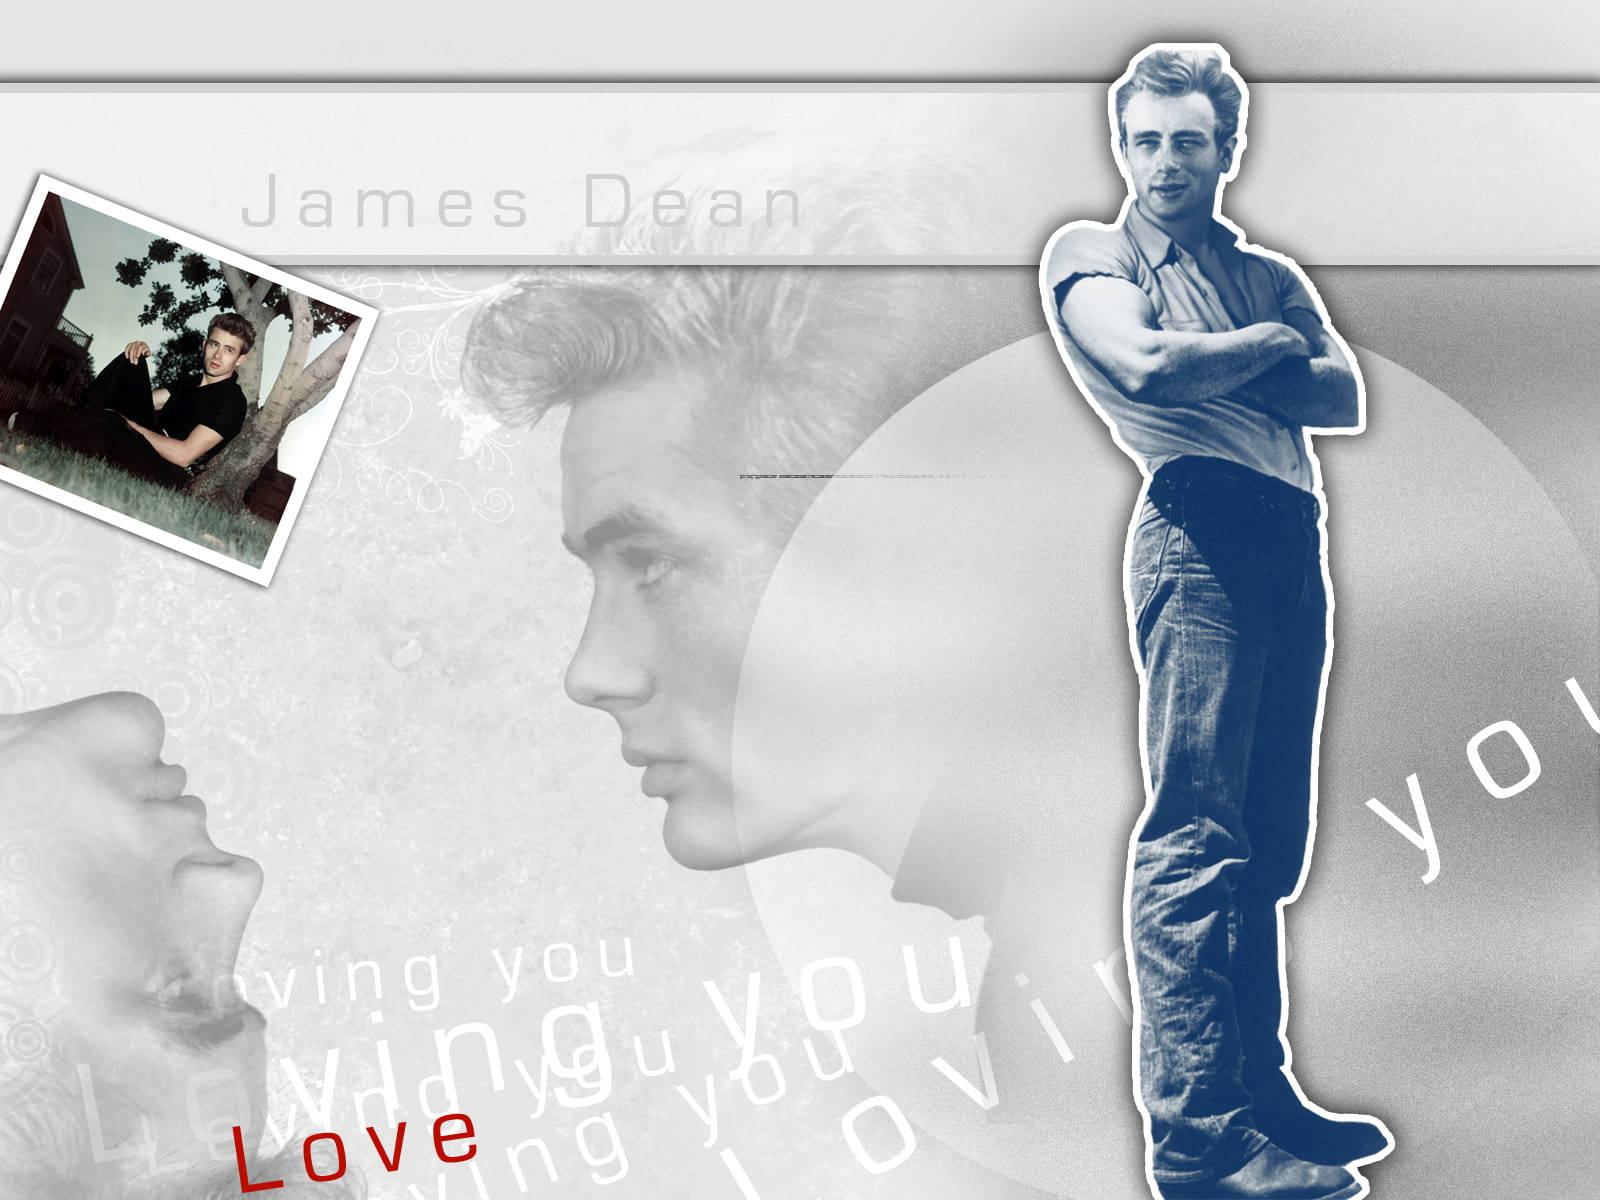 James Dean Loving You Wallpaper